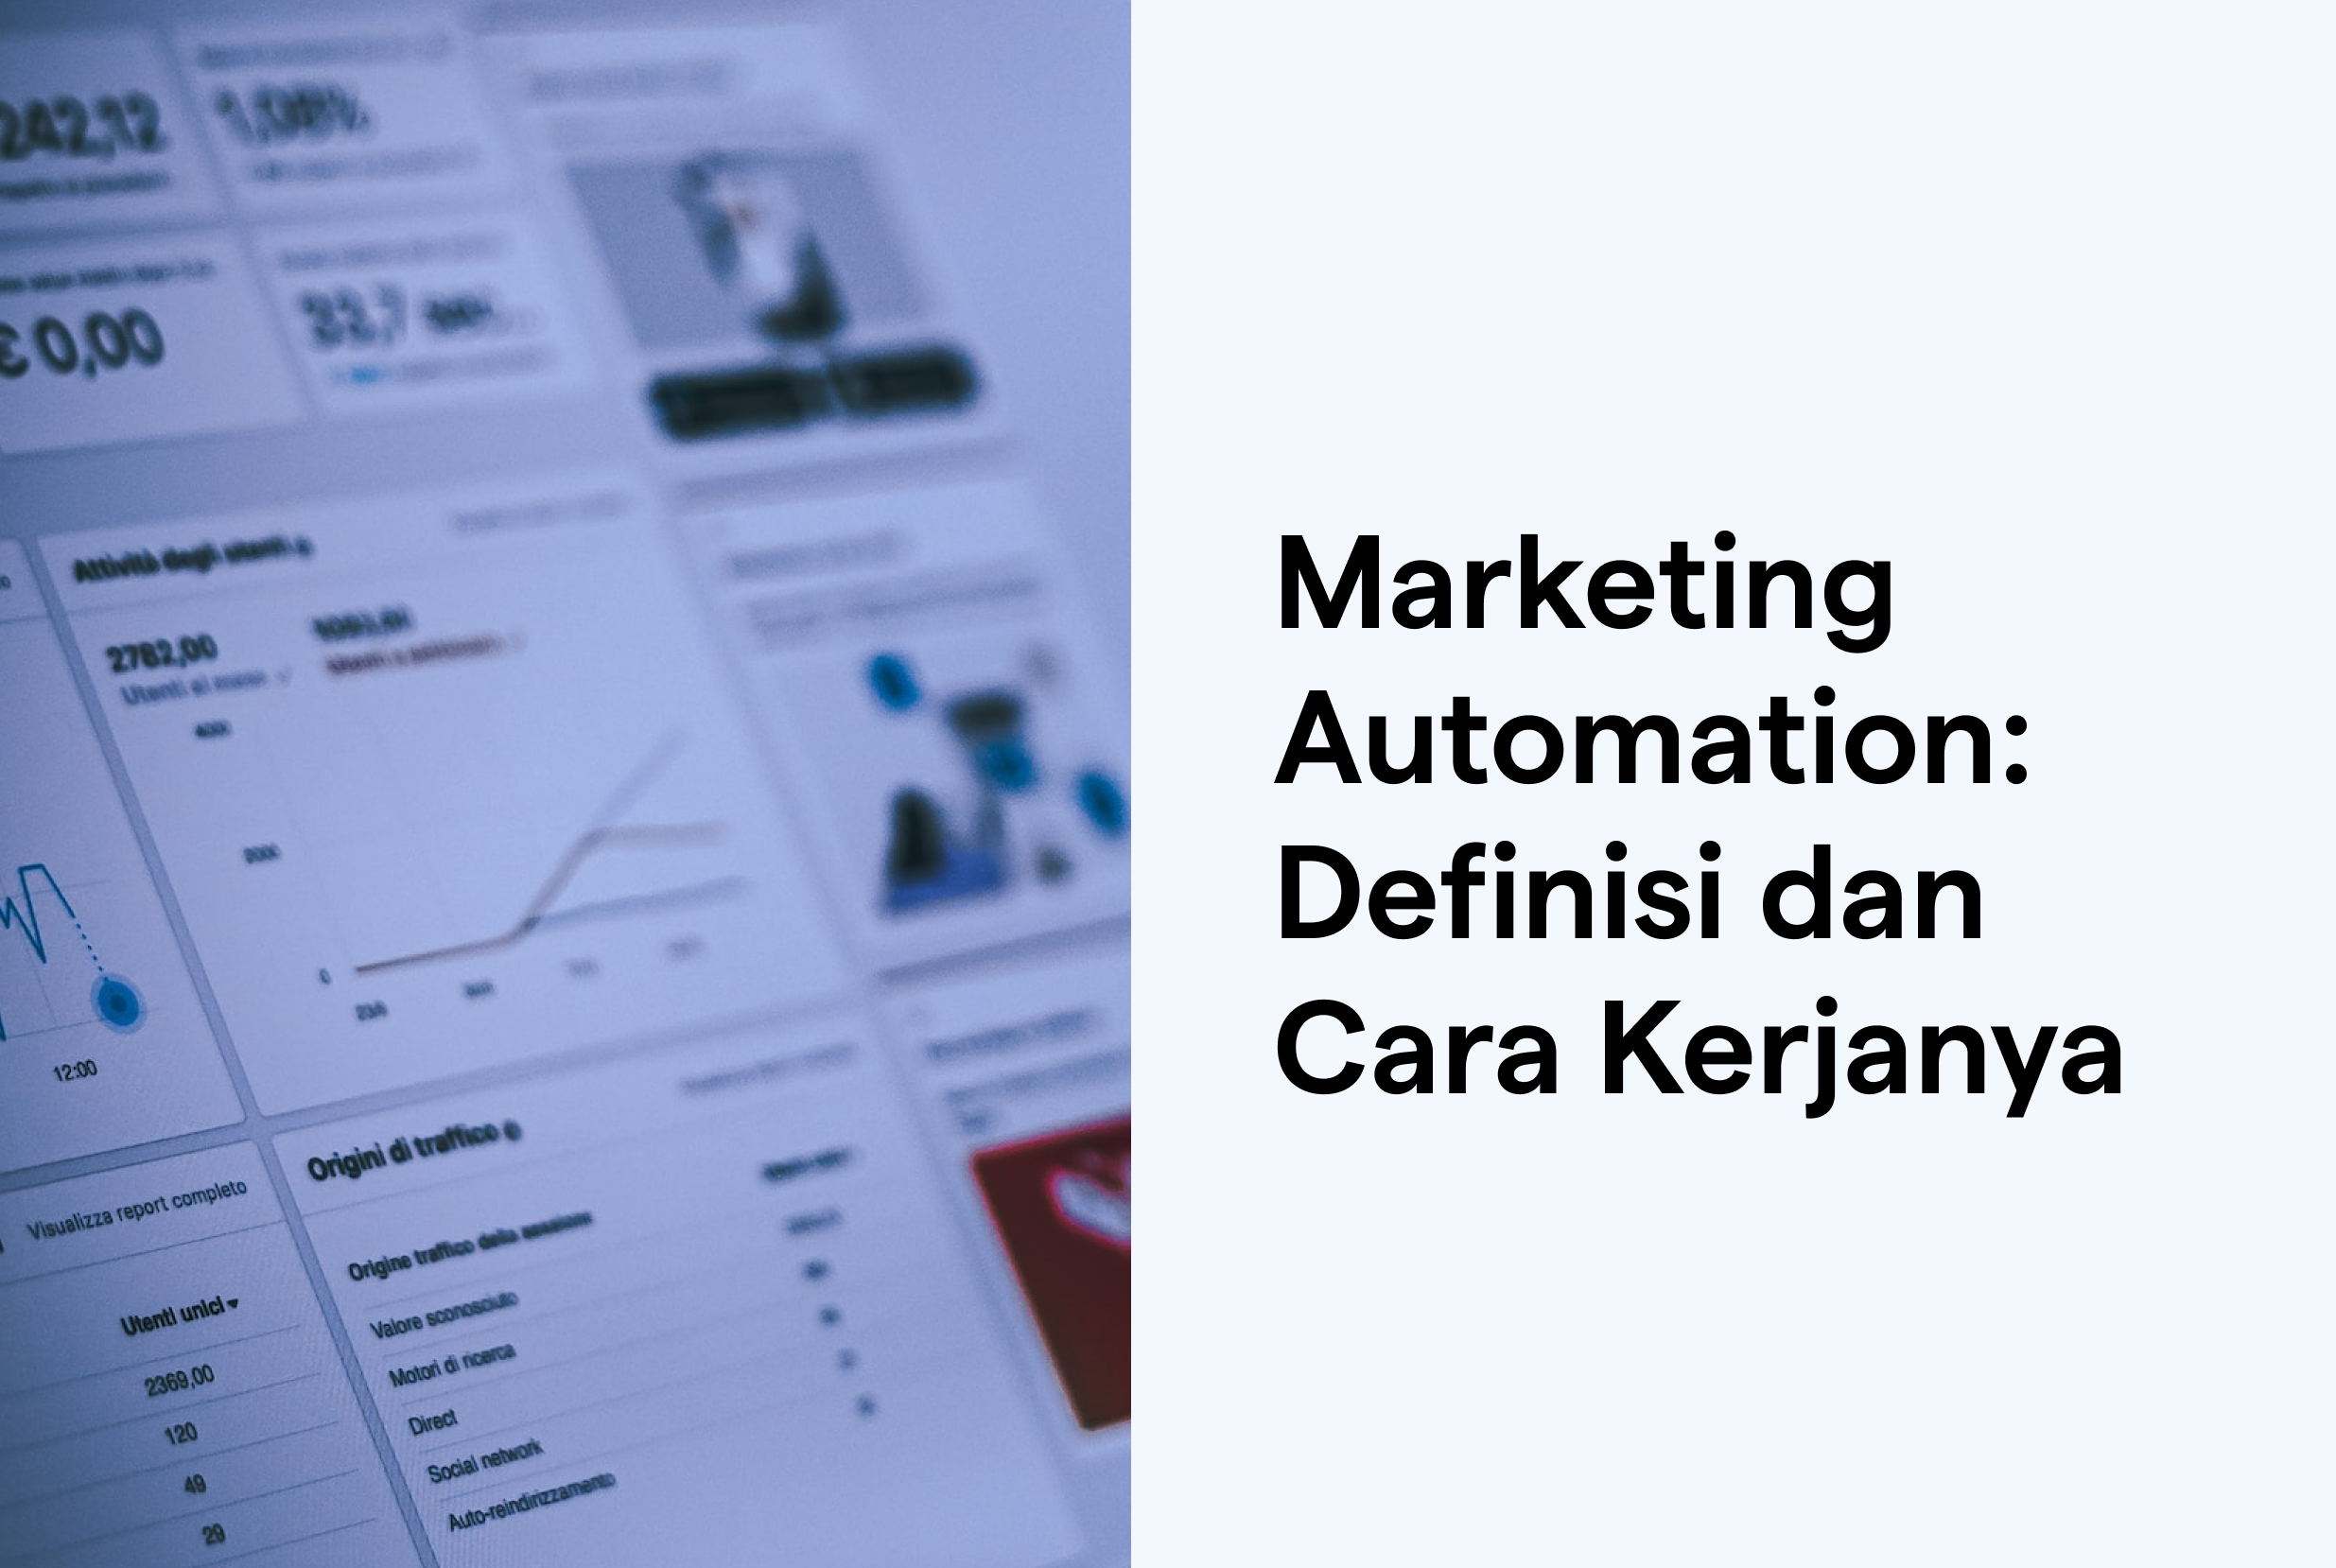 Marketing Automation: Definisi, Manfaat, serta Cara Kerjanya